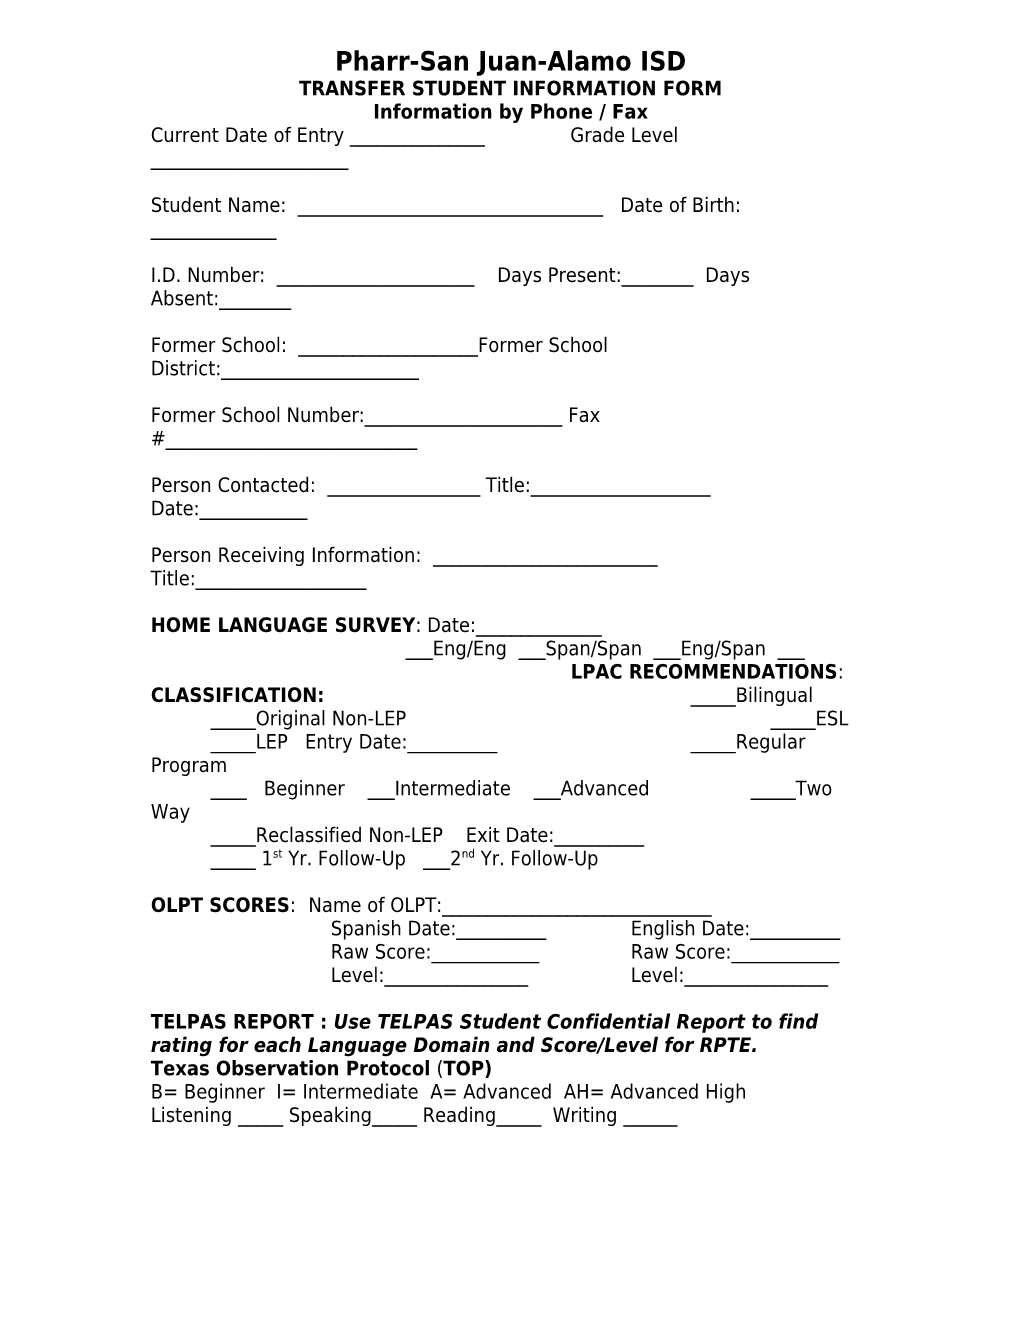 Transfer Student Information Form